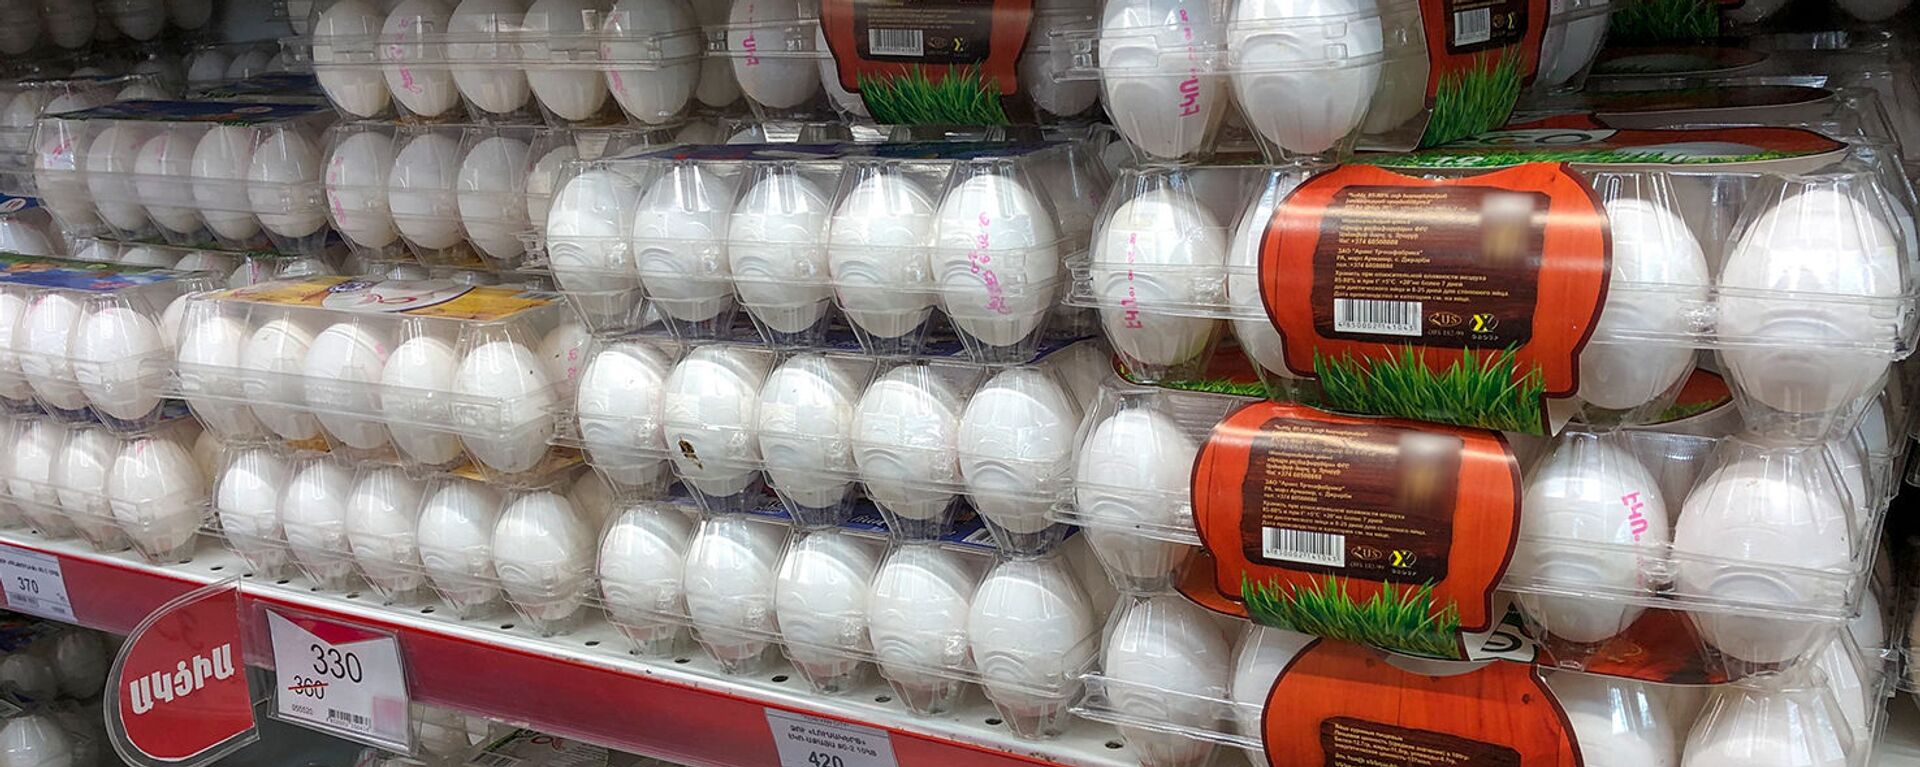 Яйца на прилавках супермаркета - Sputnik Արմենիա, 1920, 25.03.2021